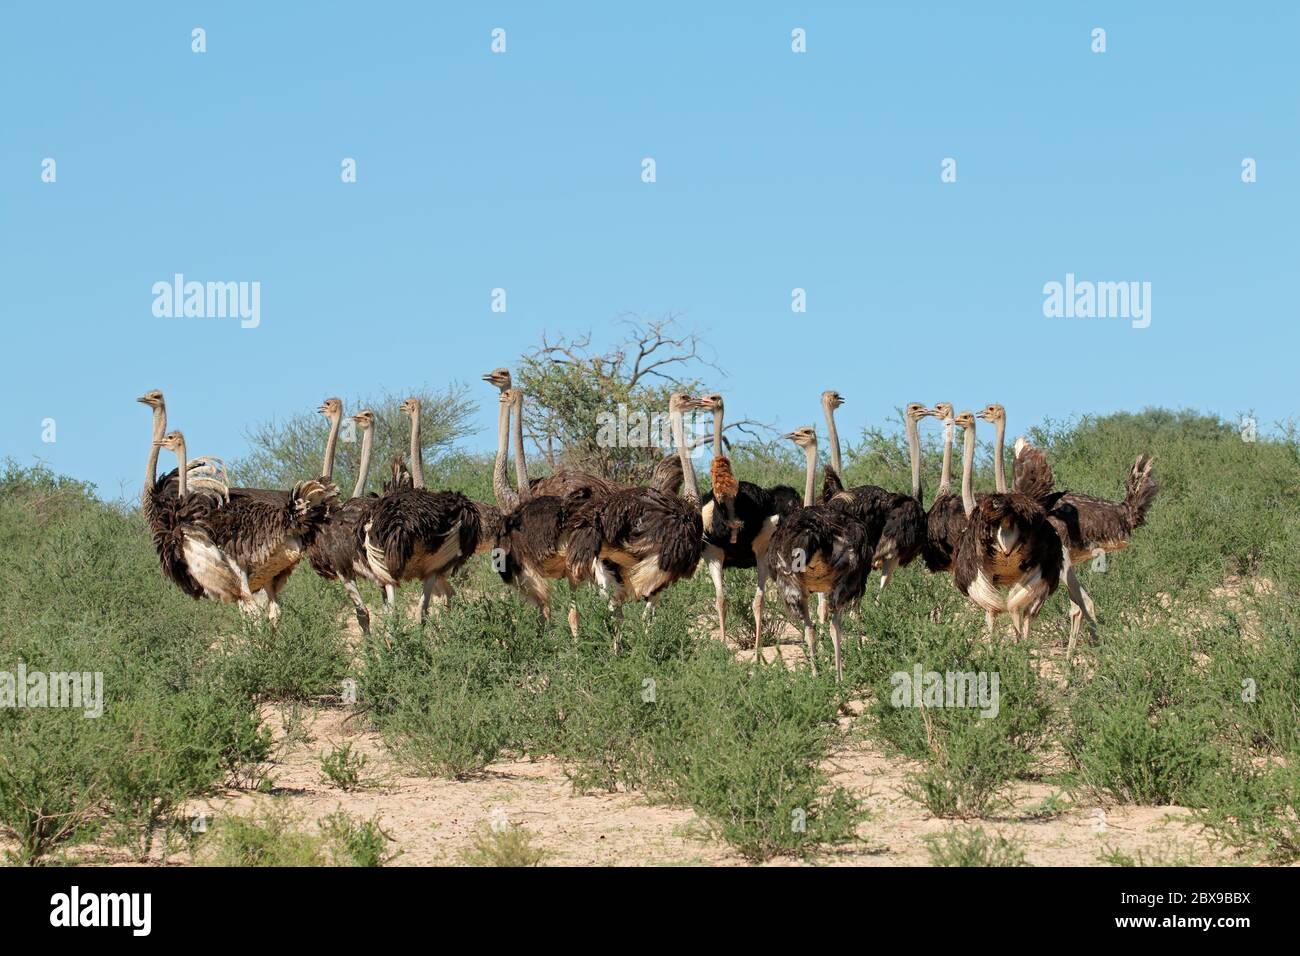 Group of ostriches (Struthio camelus) in natural habitat, Kalahari desert, South Africa Stock Photo